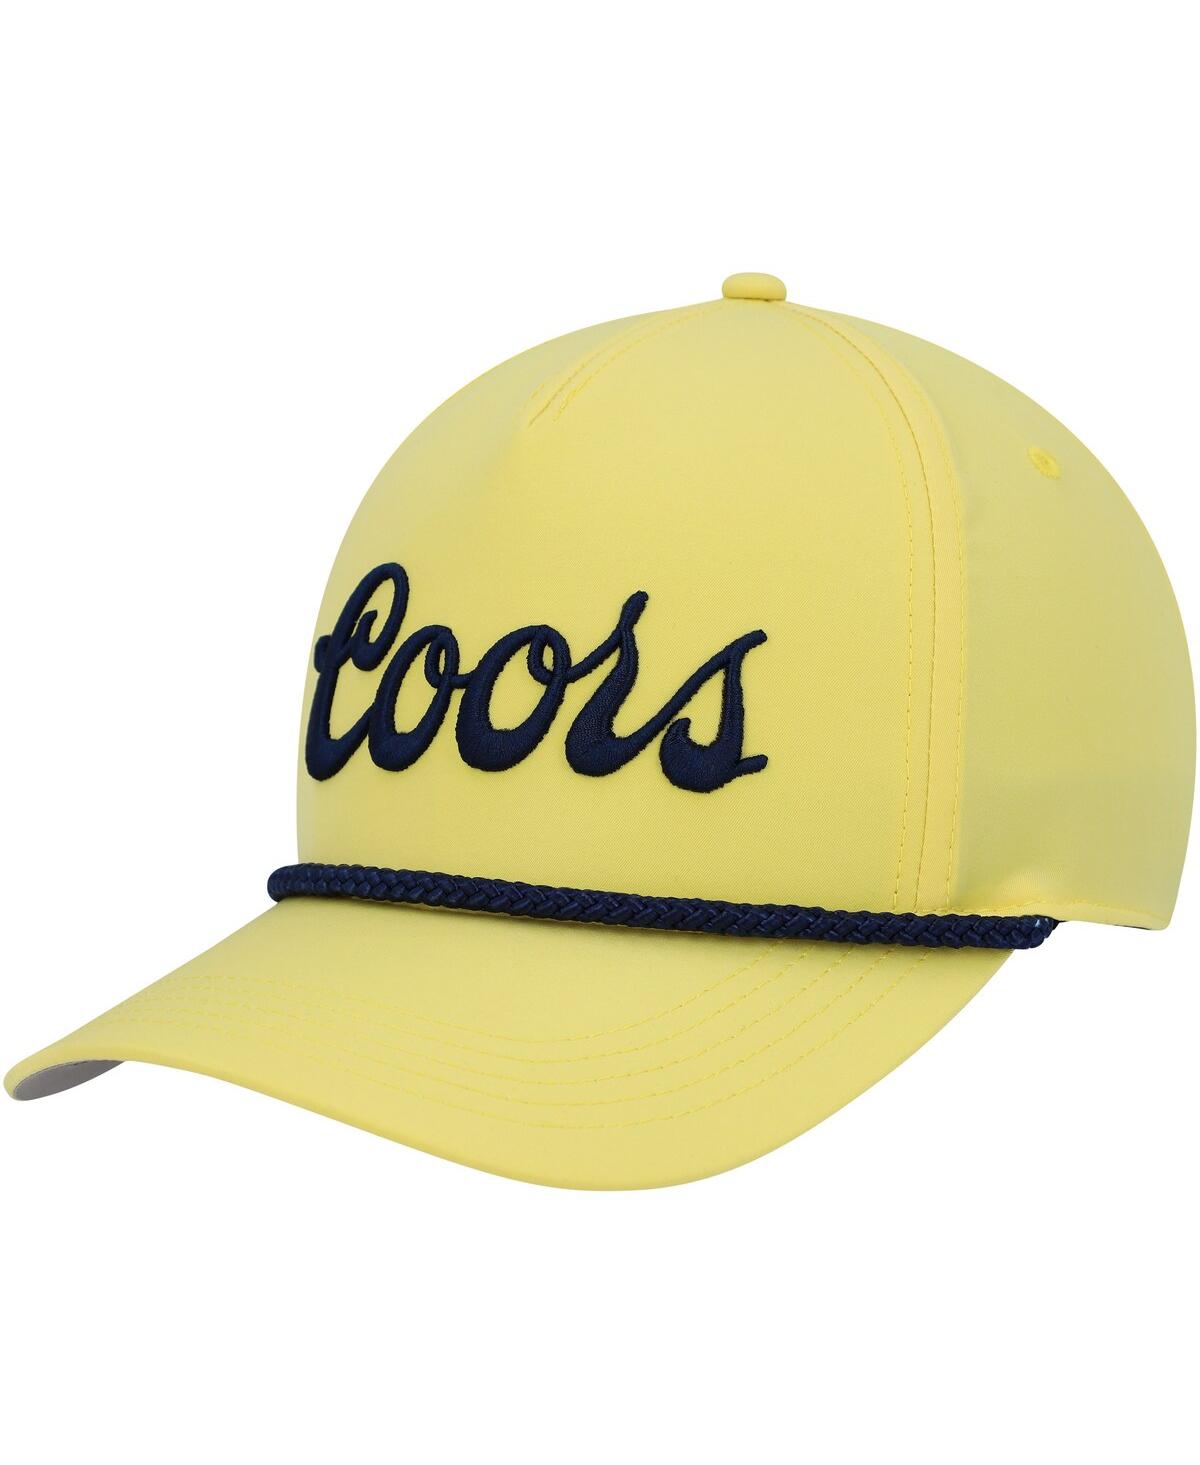 American Needle Men's  Yellow Coors Traveler Snapback Hat